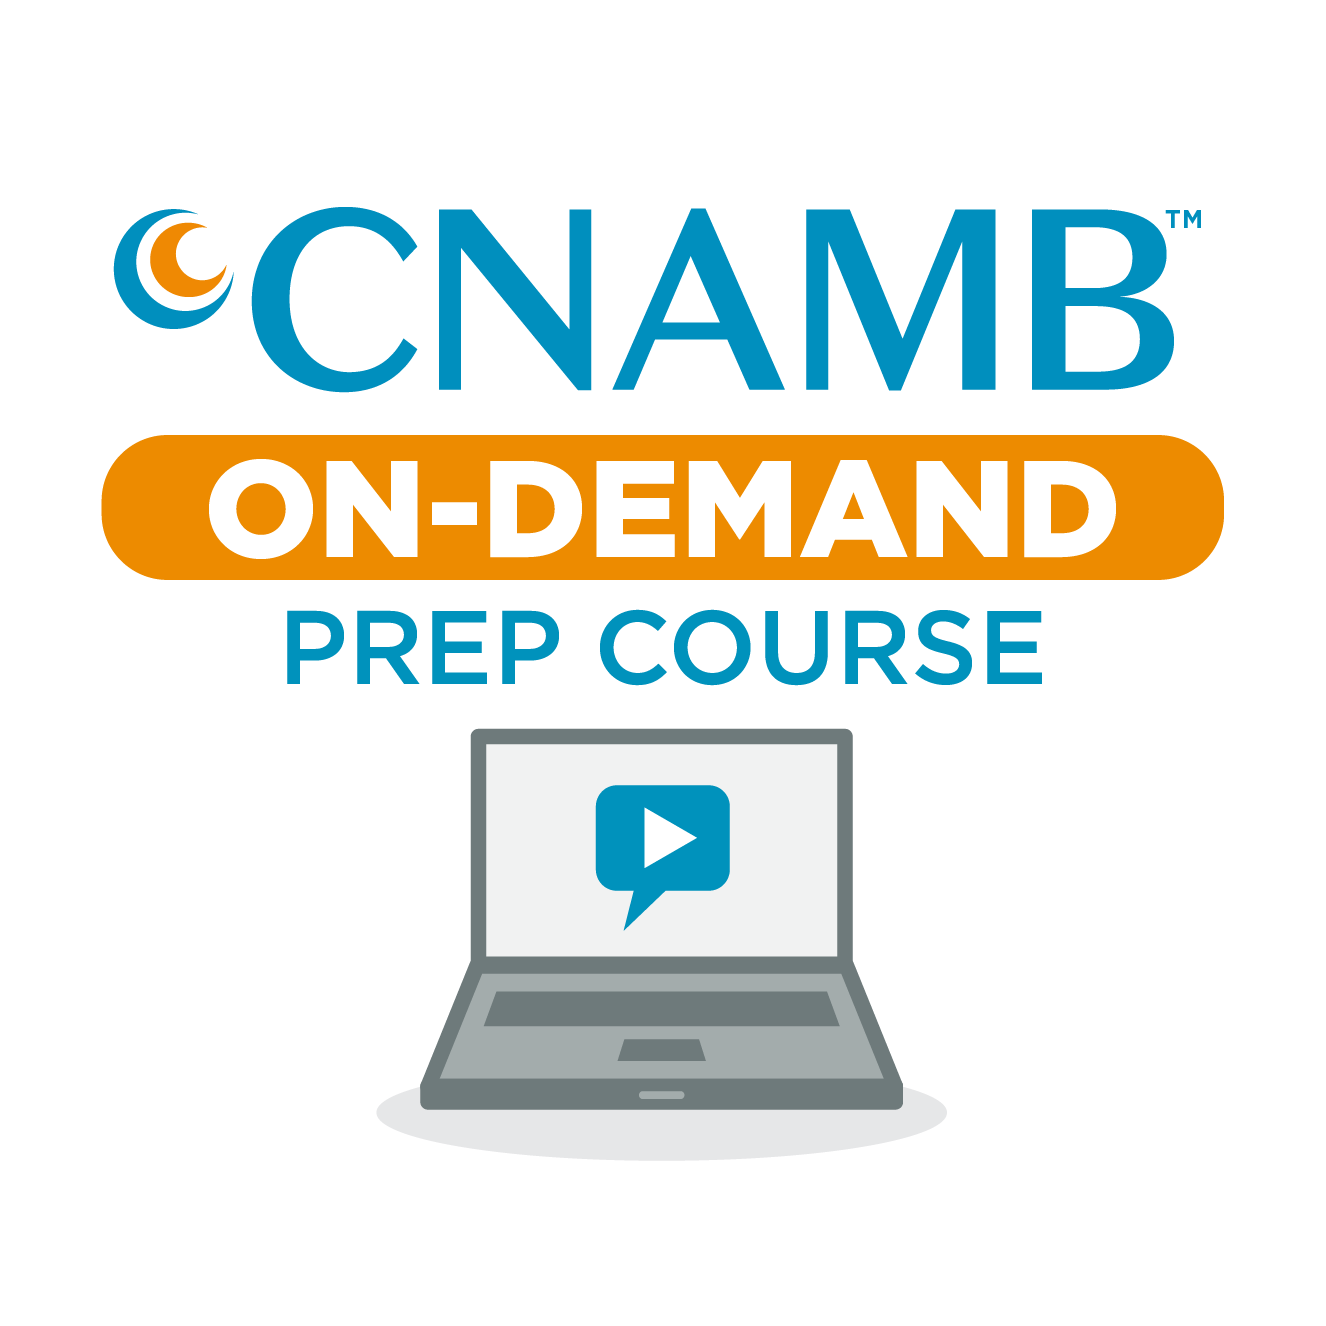 CNAMB On-Demand Prep Course